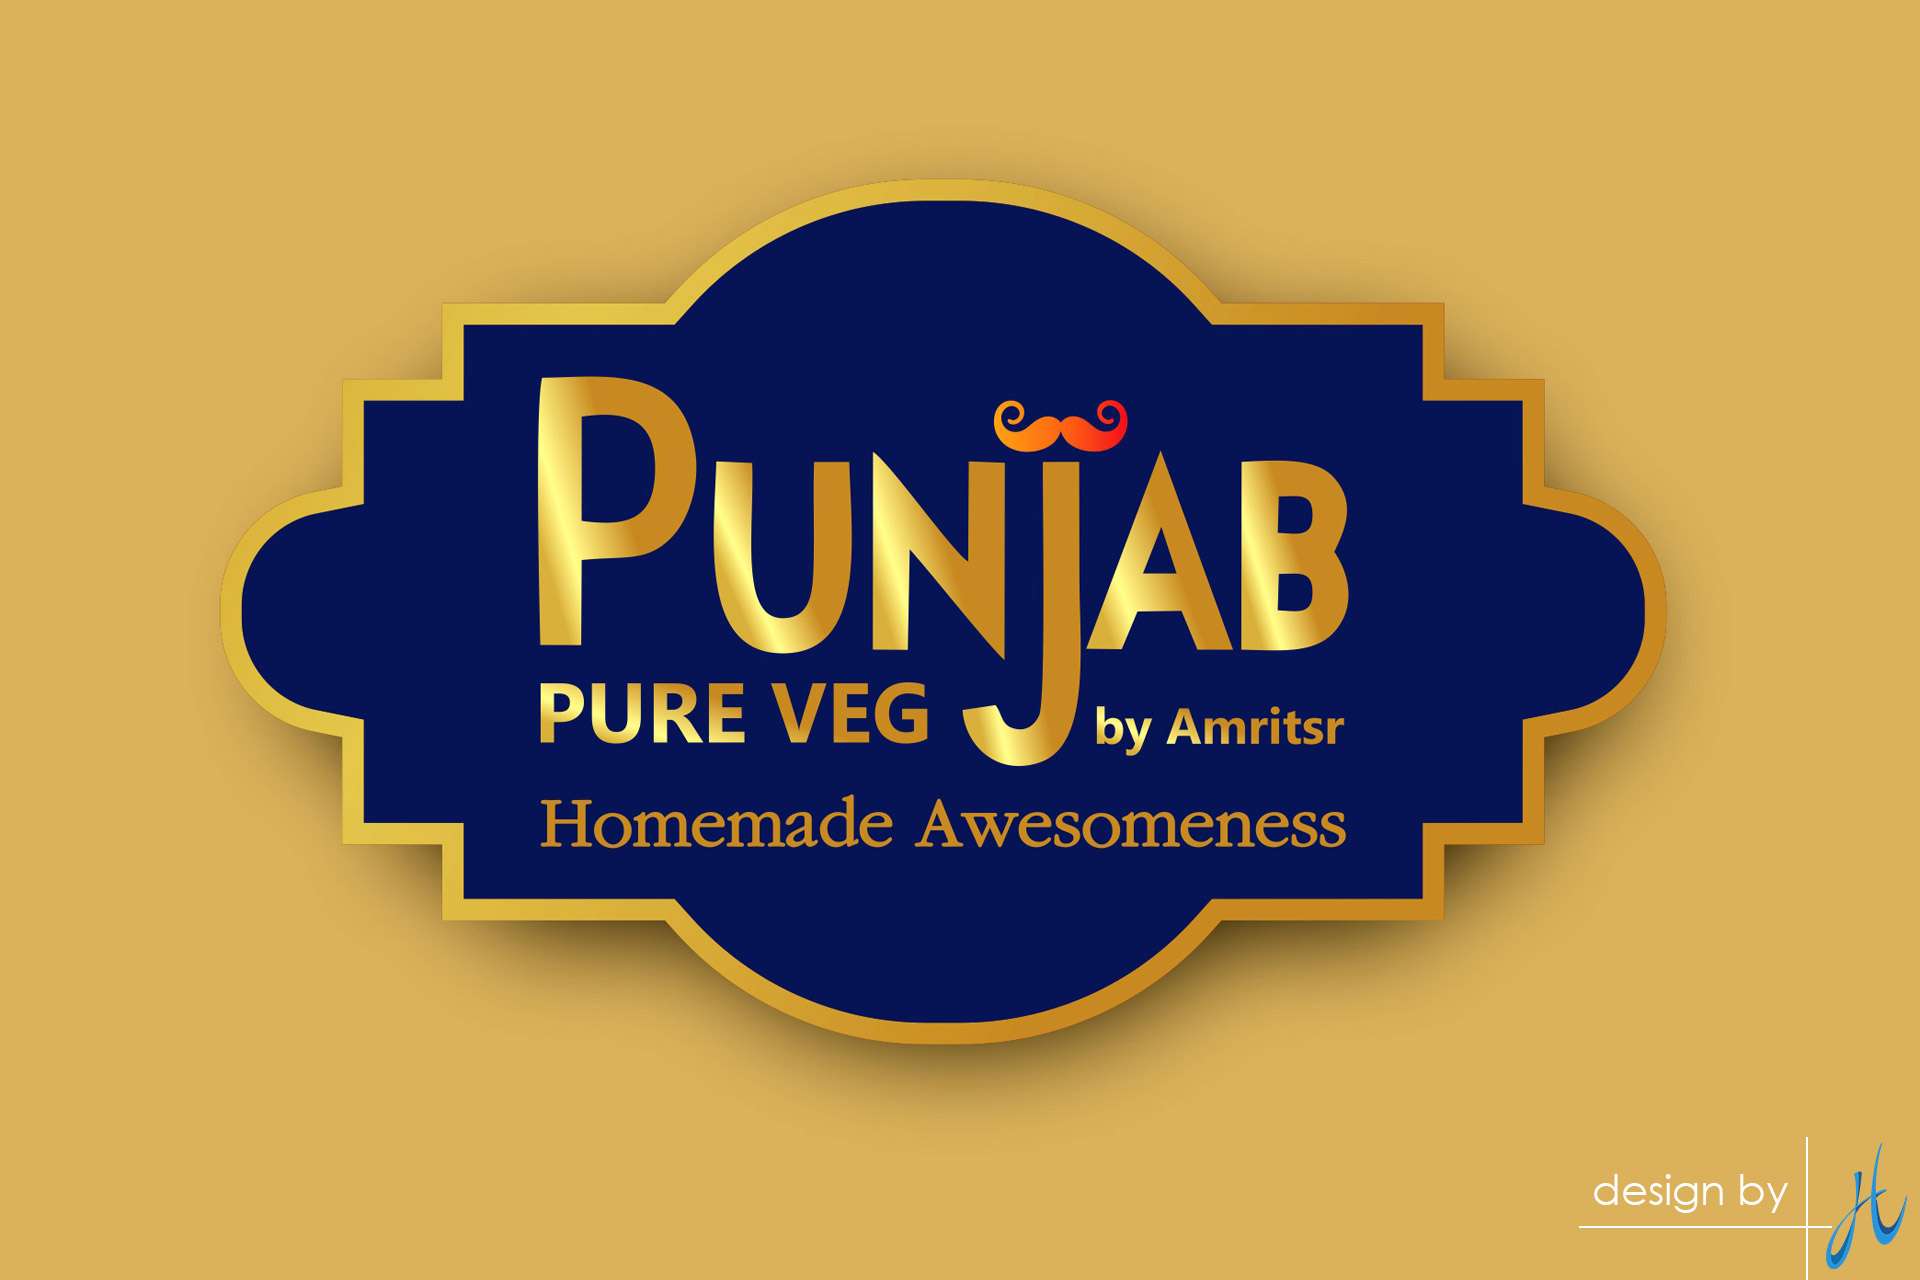 Punjab Pure Veg